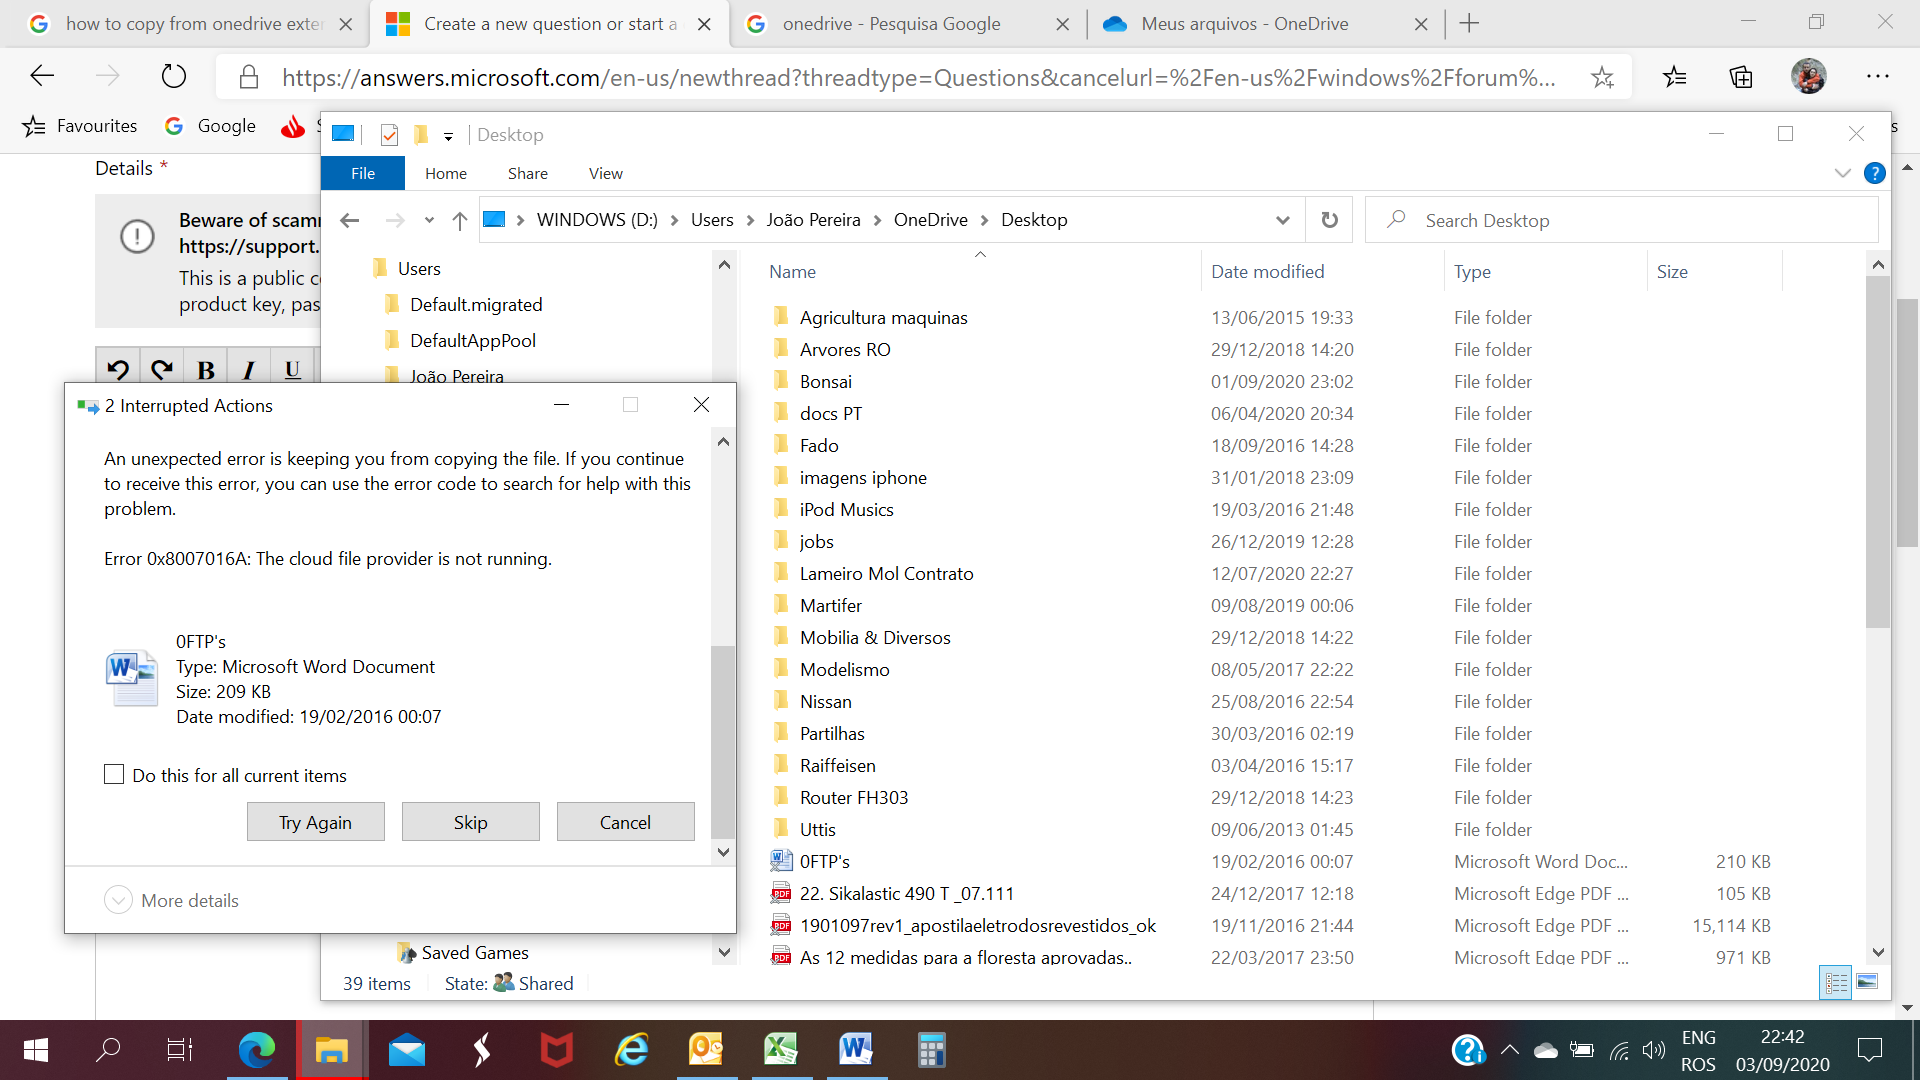 One Drive Folder in an External Drive, from my broken Laptop dd227634-e218-49f9-9a51-5c1fbcff3531?upload=true.png